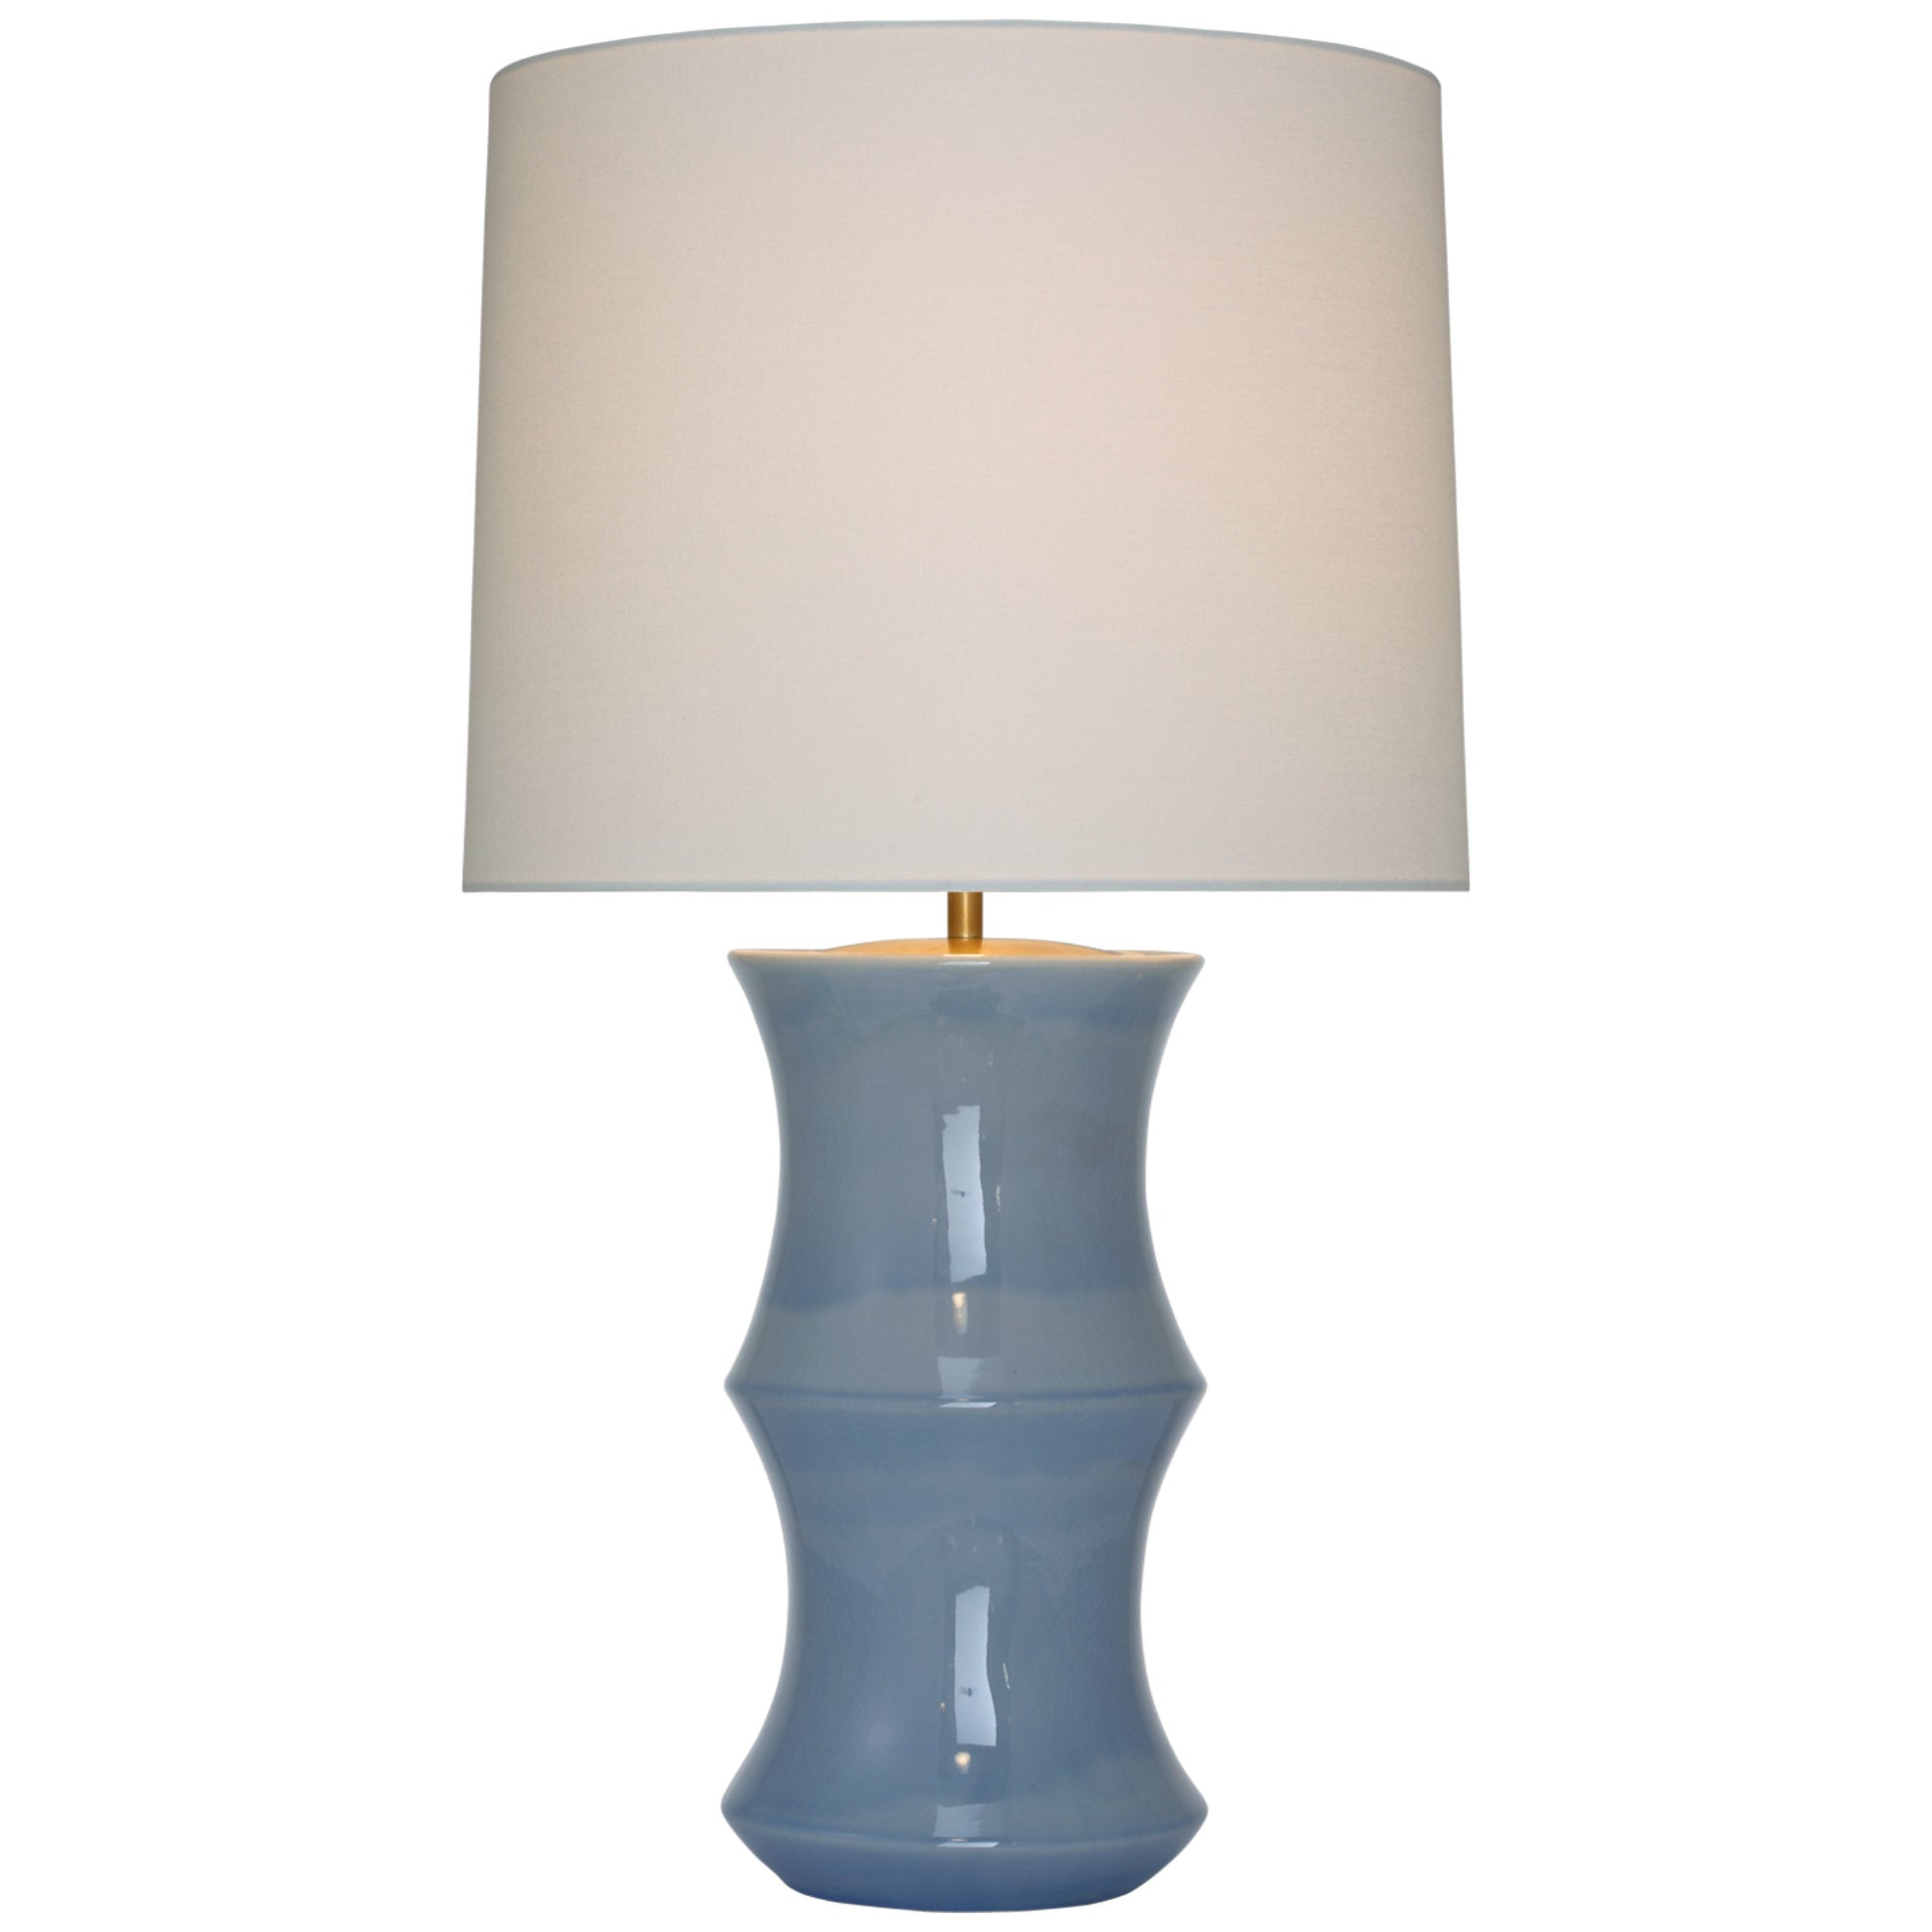 AERIN Marella Medium Table Lamp in Polar Blue Crackle with Linen Shade